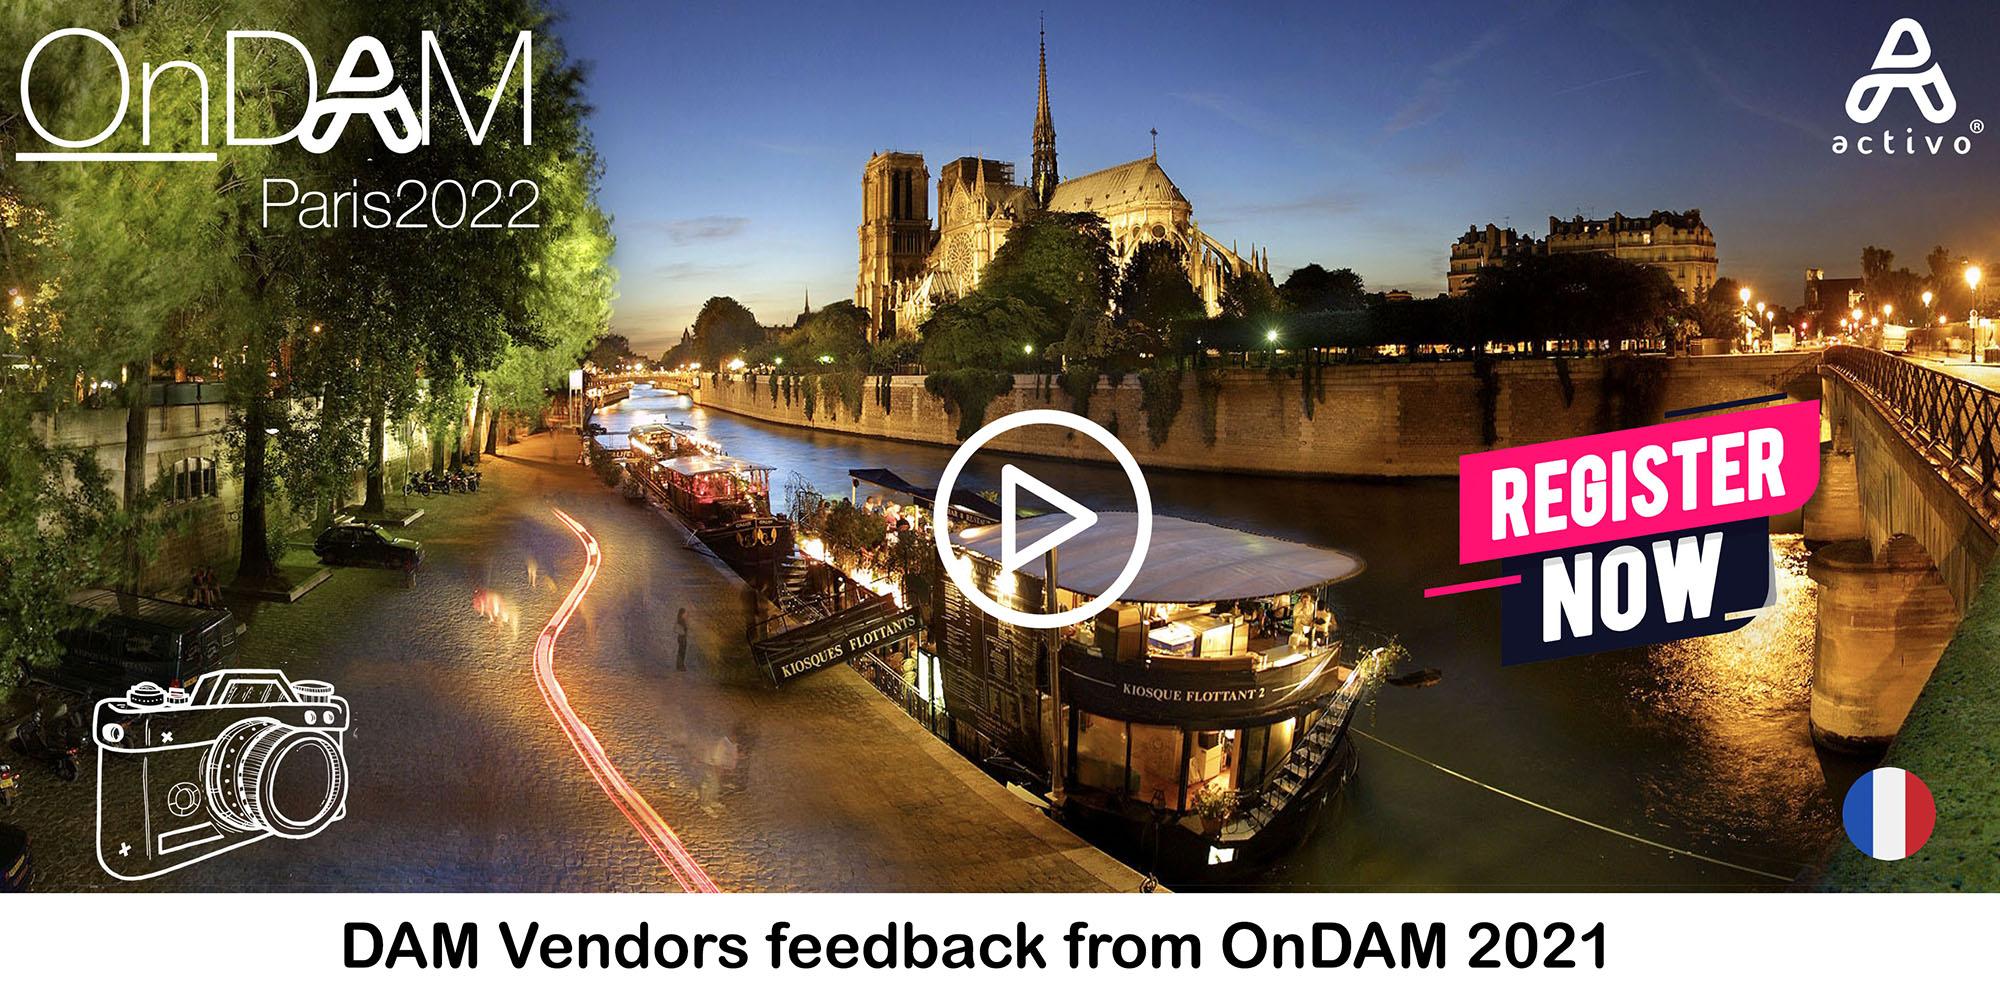 DAM Vendors Feedback from OnDAM 2021